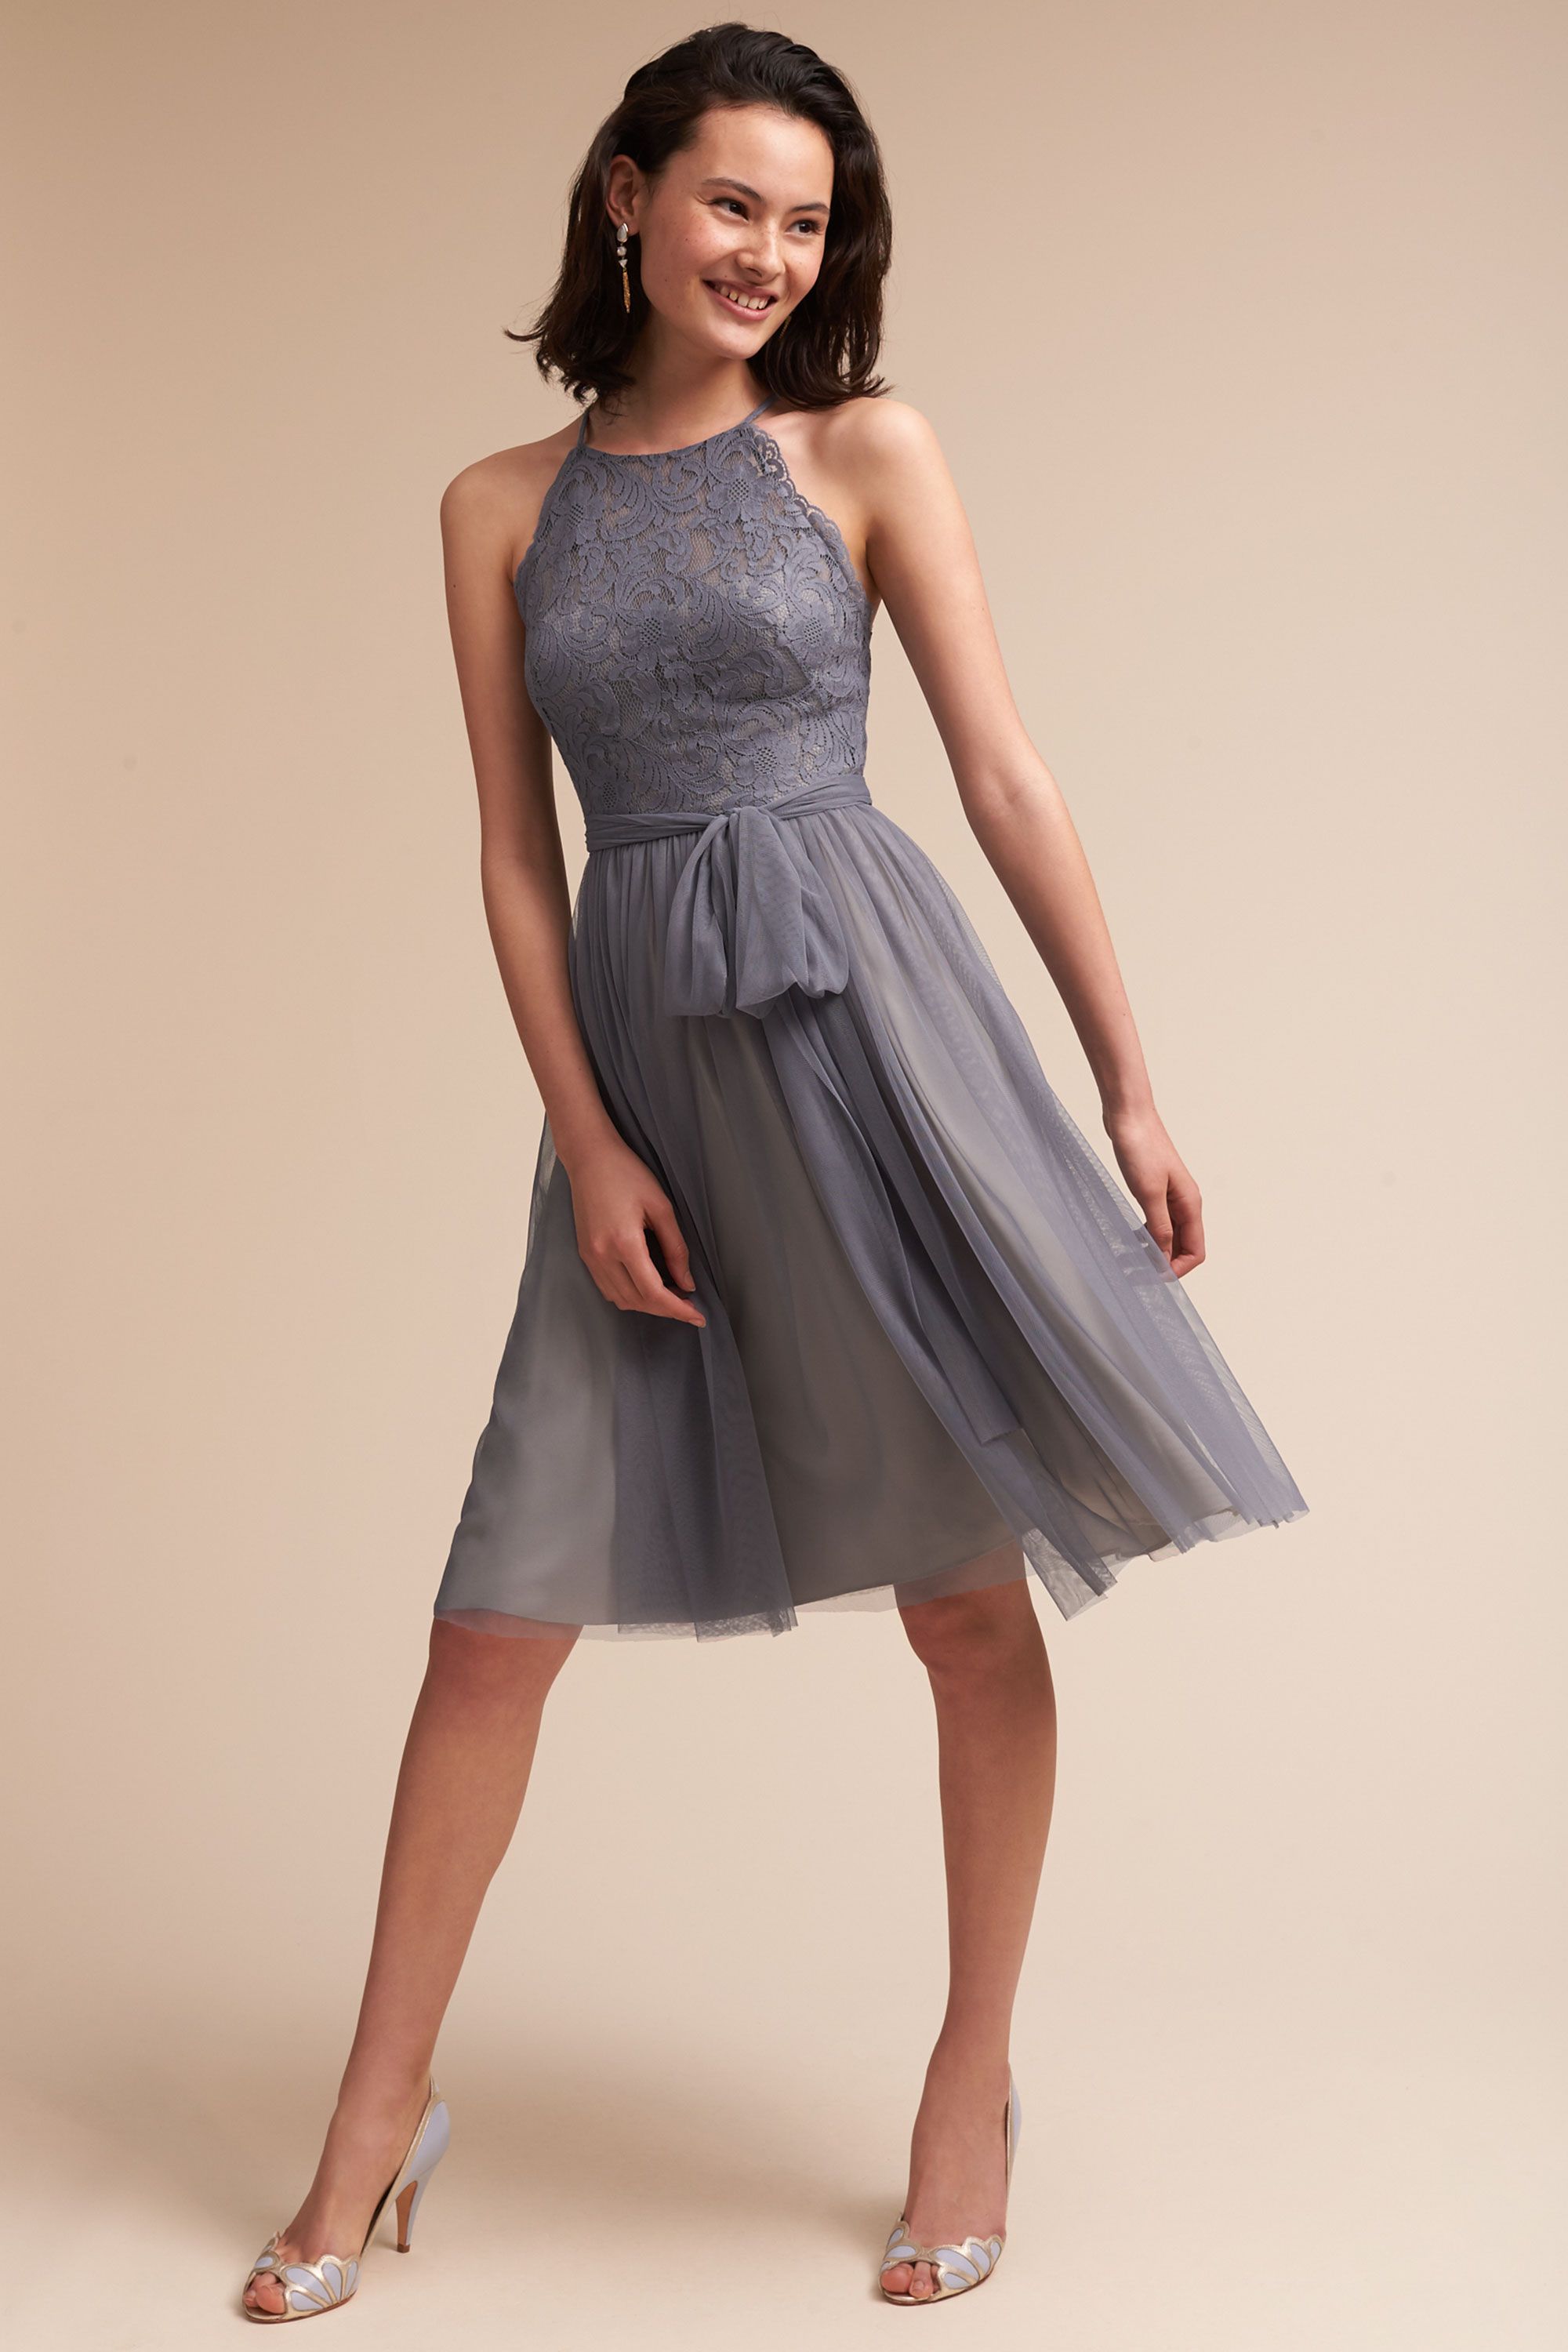 York Dress in Sale | BHLDN